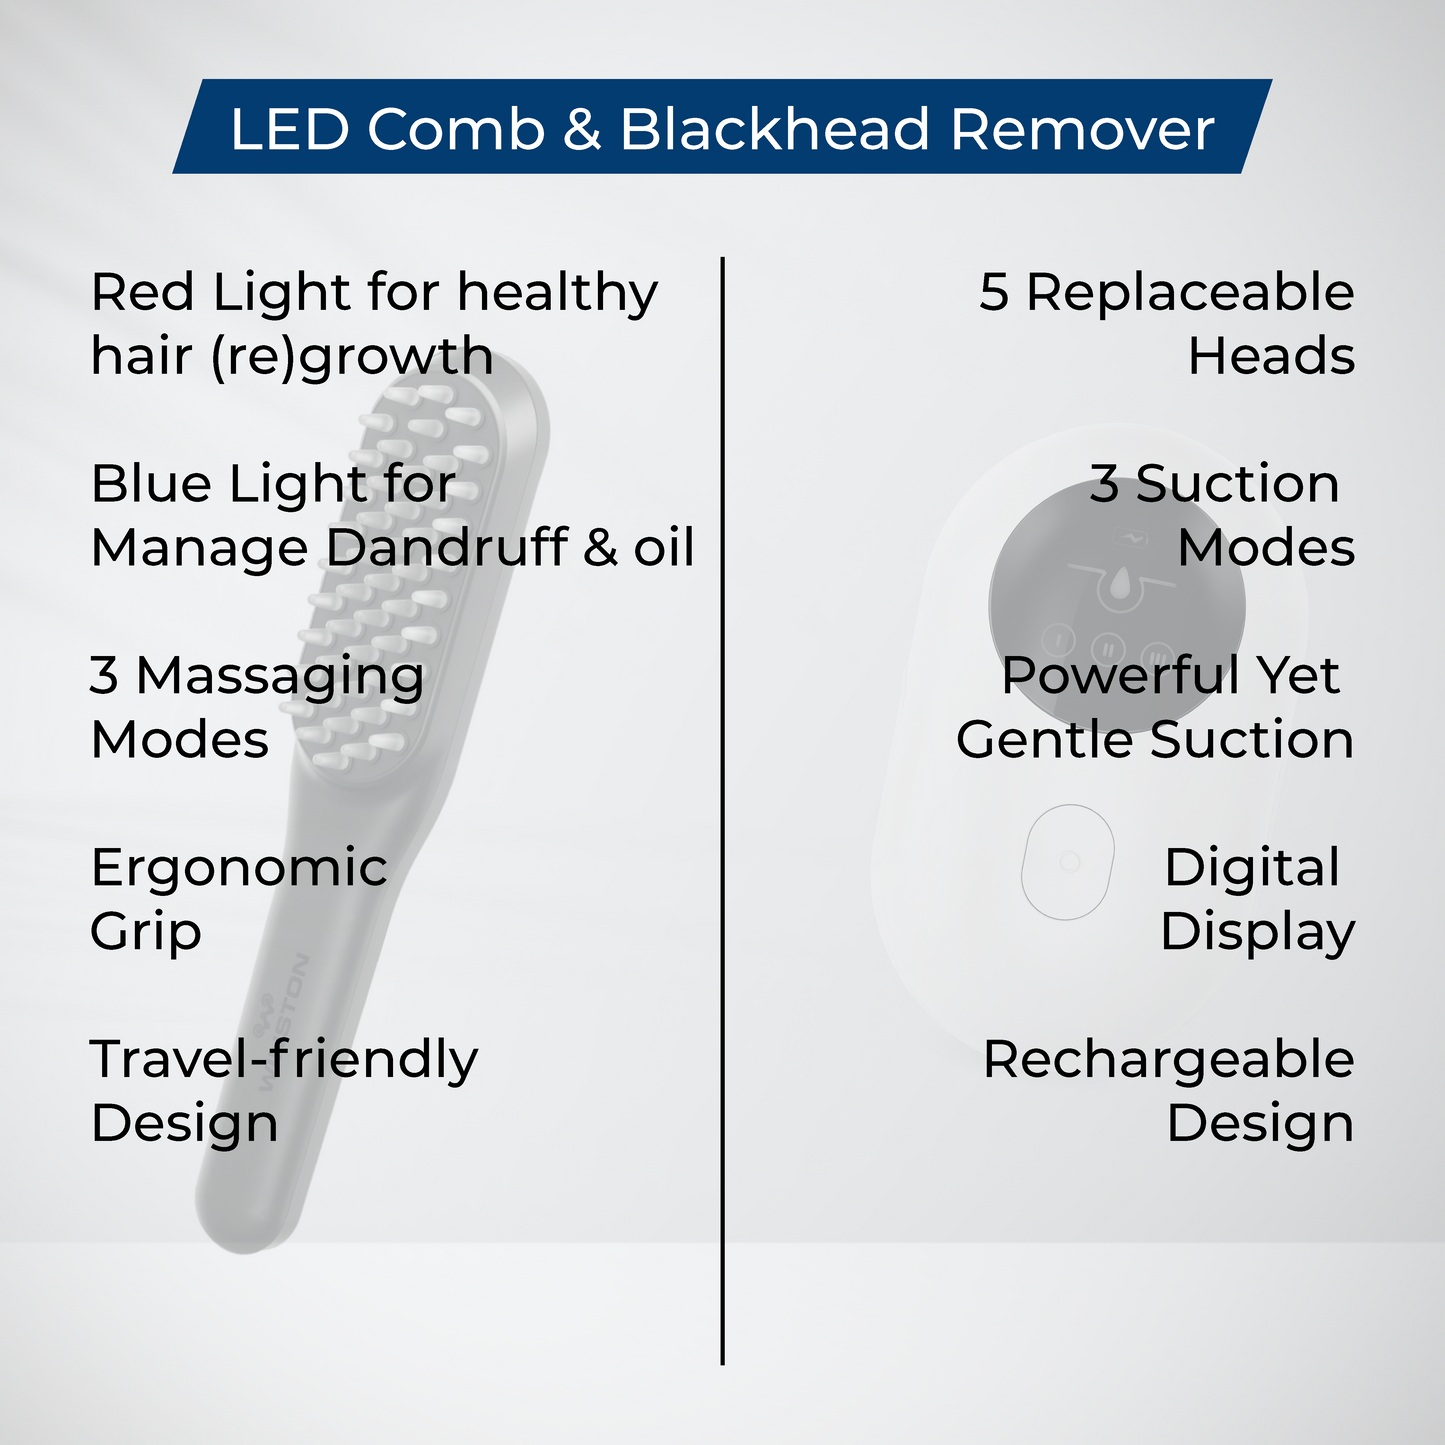 LED Comb & Blackhead Remover Combo